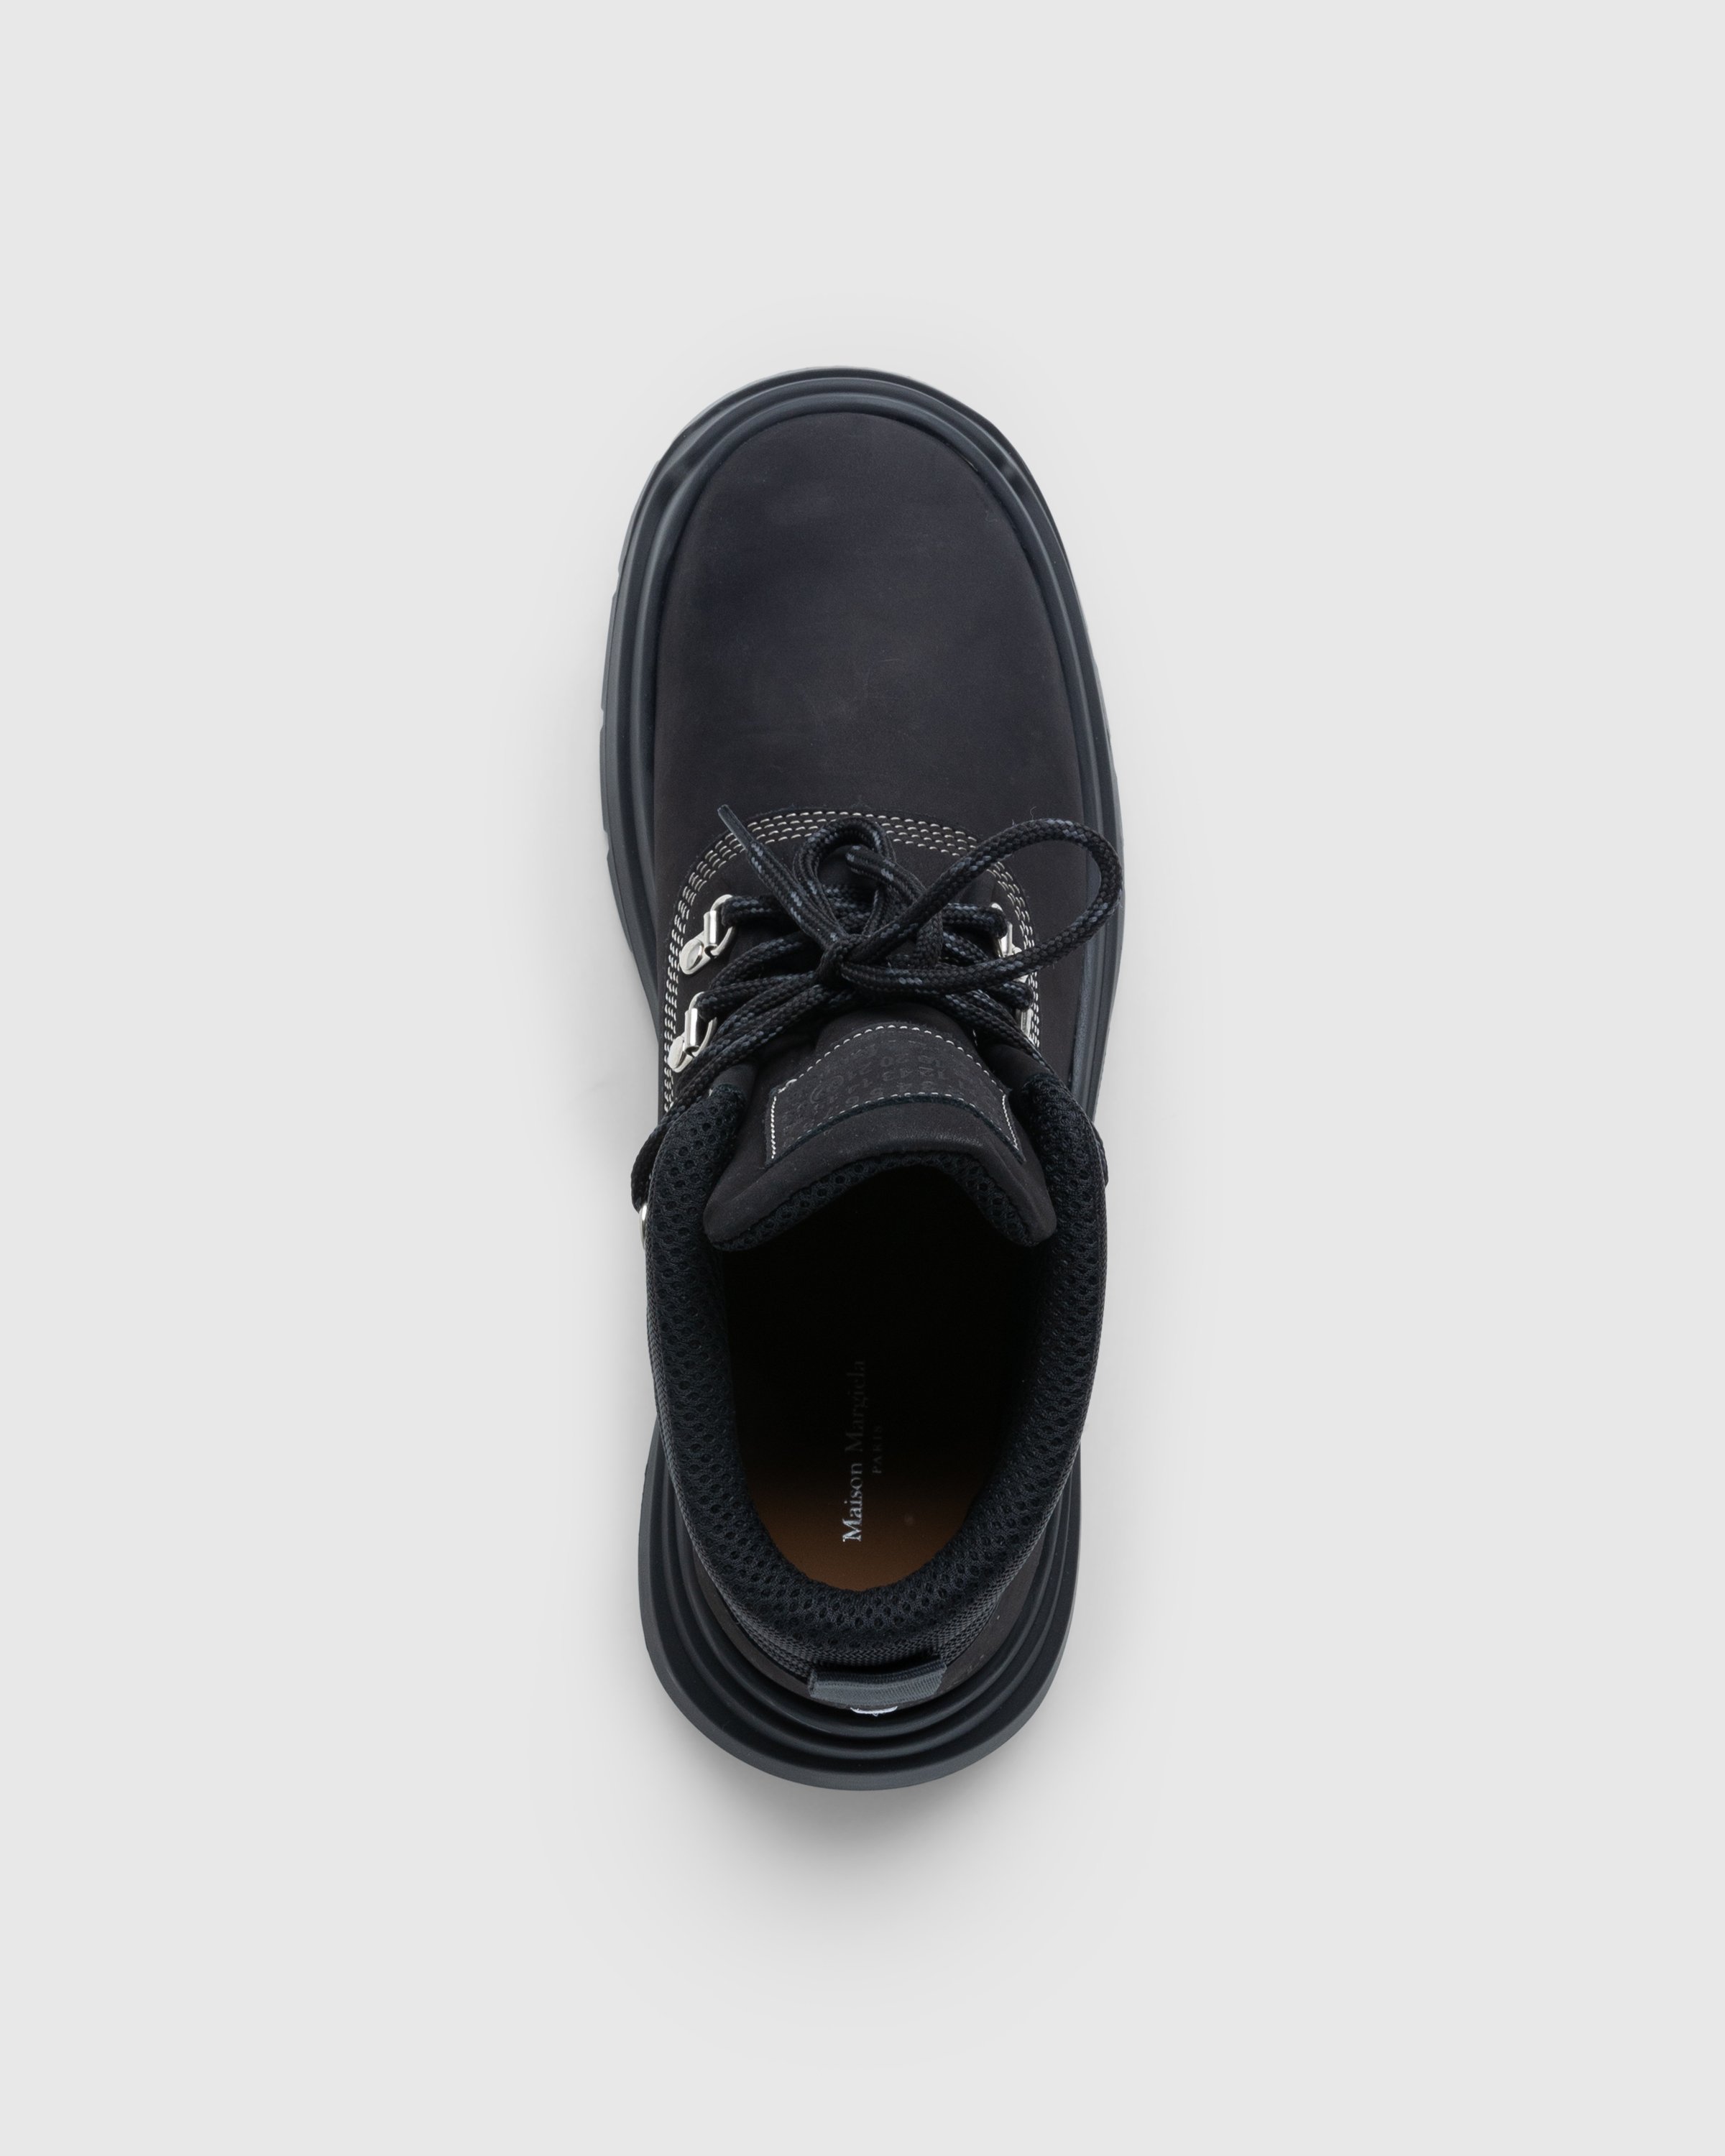 Maison Margiela - Alex Hiking Boot Black/Black - Footwear - Black - Image 5